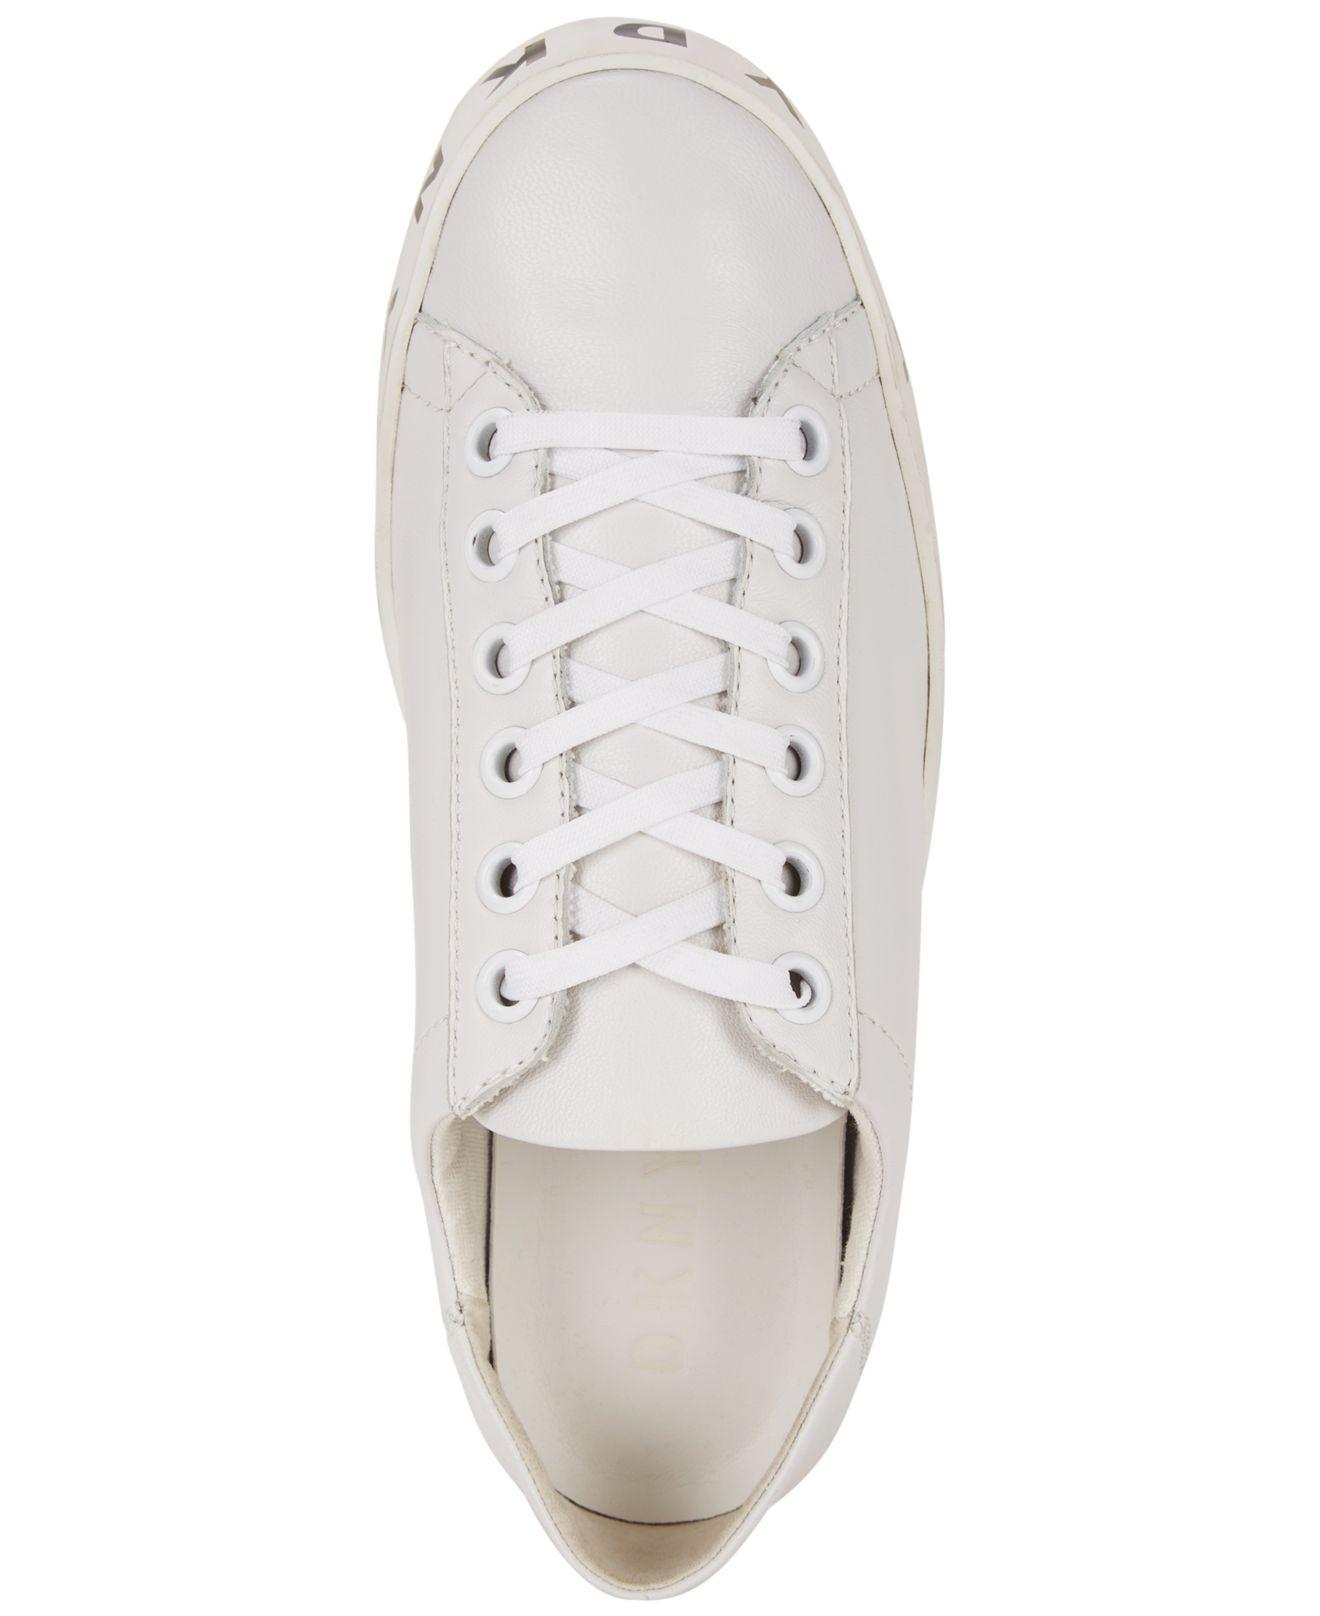 DKNY Knitted Platform Sneaker in White | Lyst